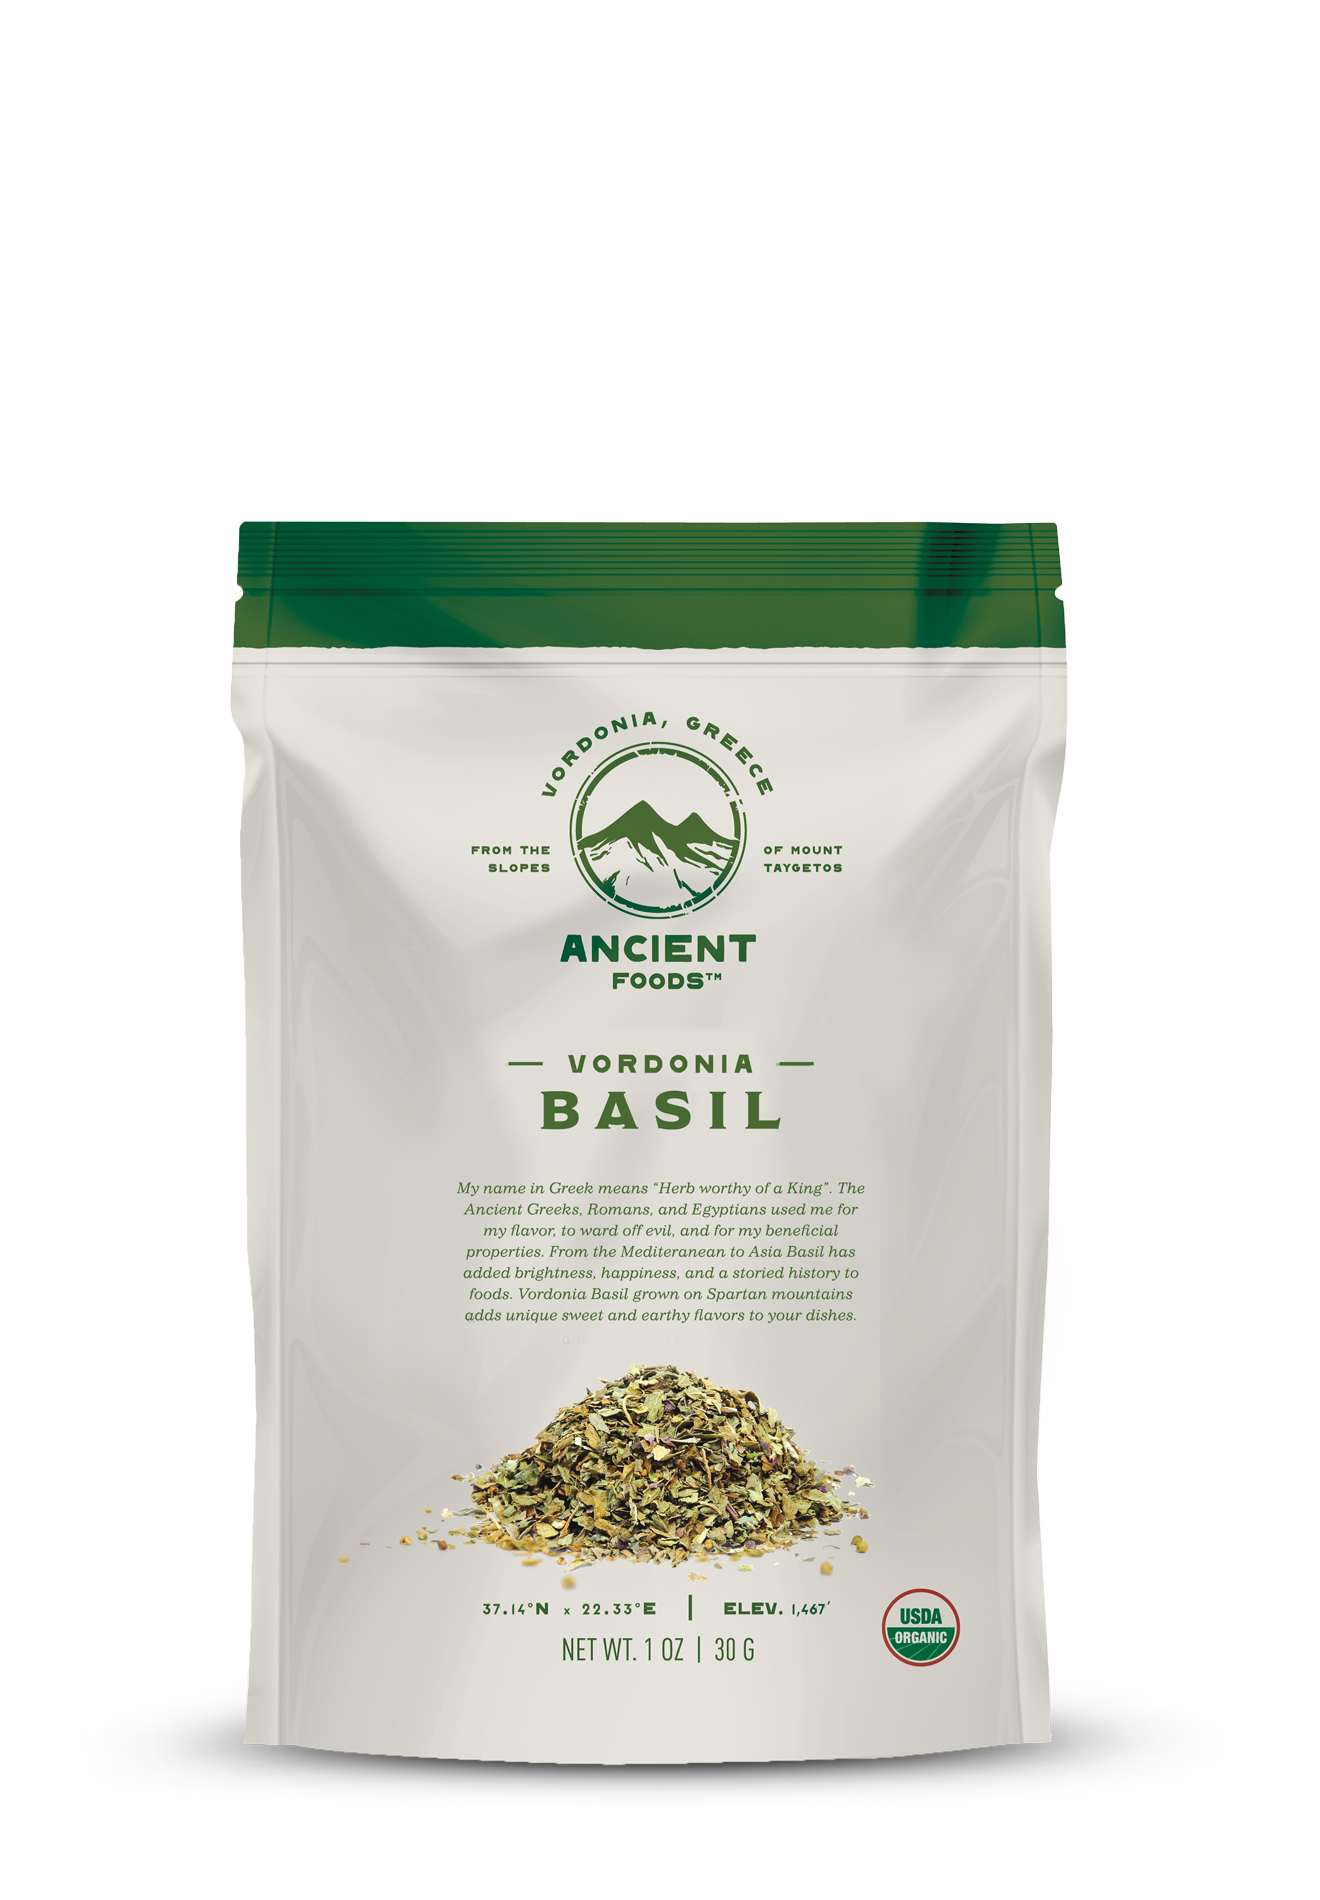 Organic Basil Herb, Vordonia Greece